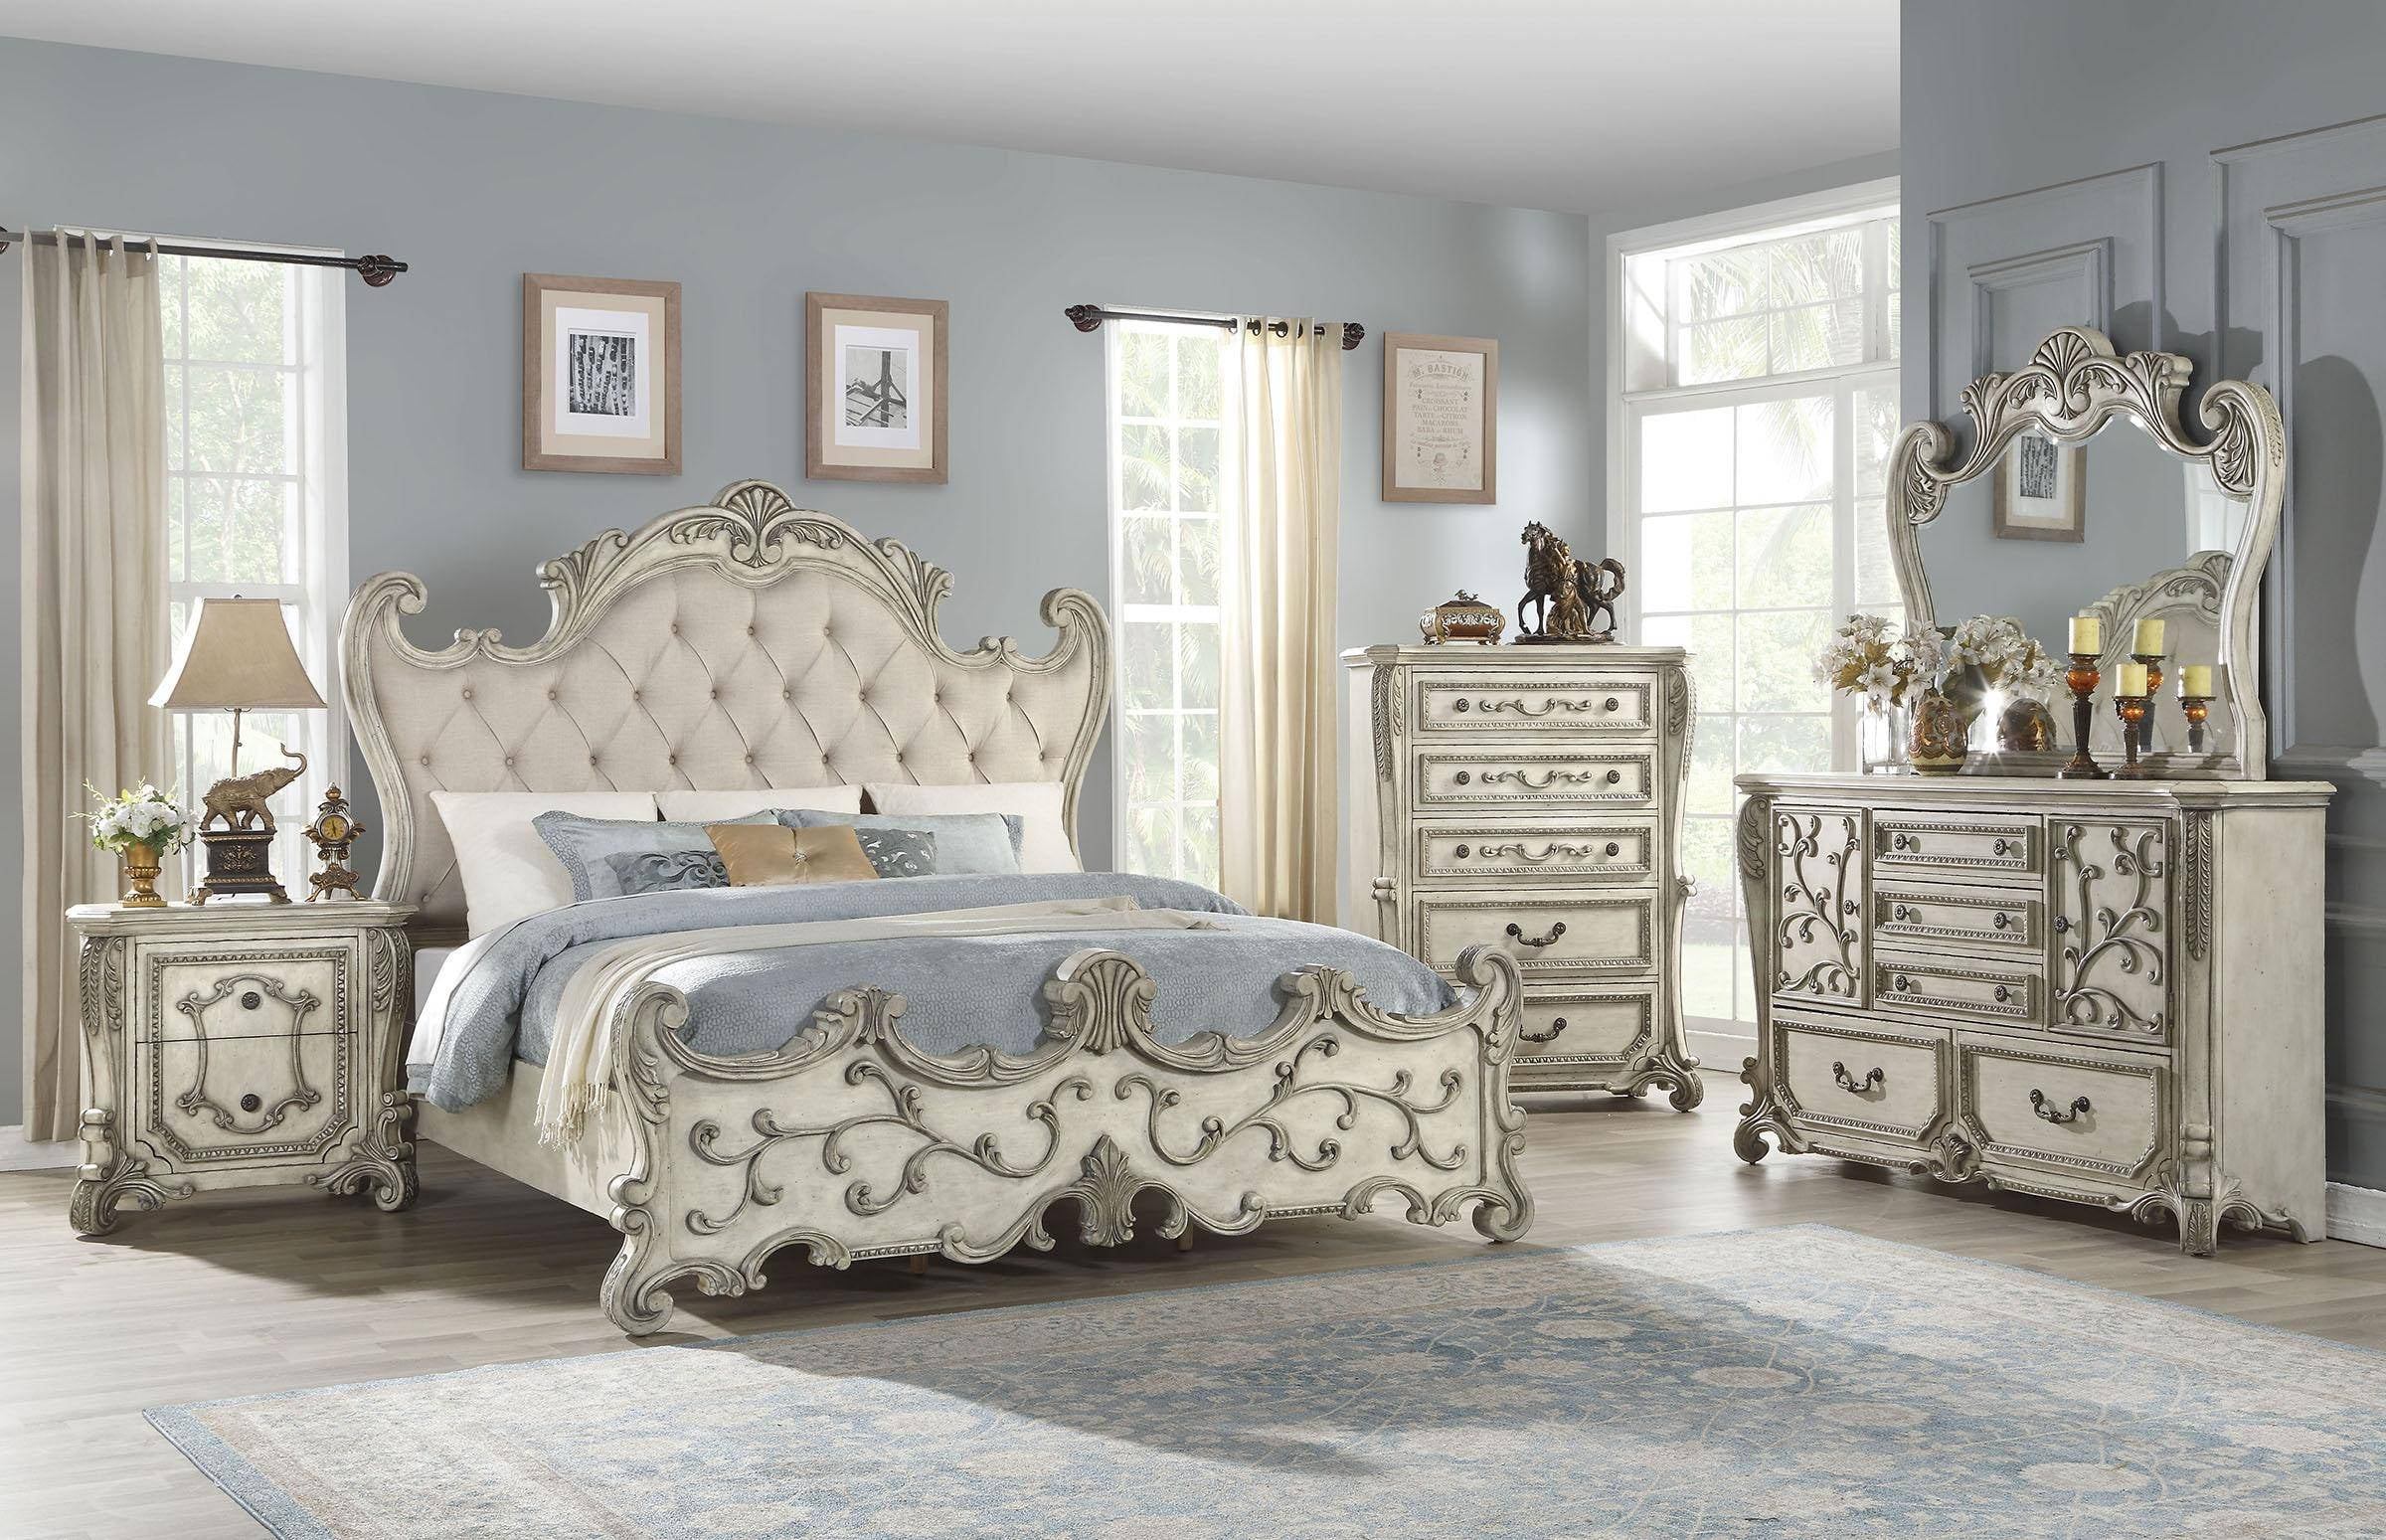 4pc Bedroom Furniture Set Antique White Finish Eastern King Size Bed